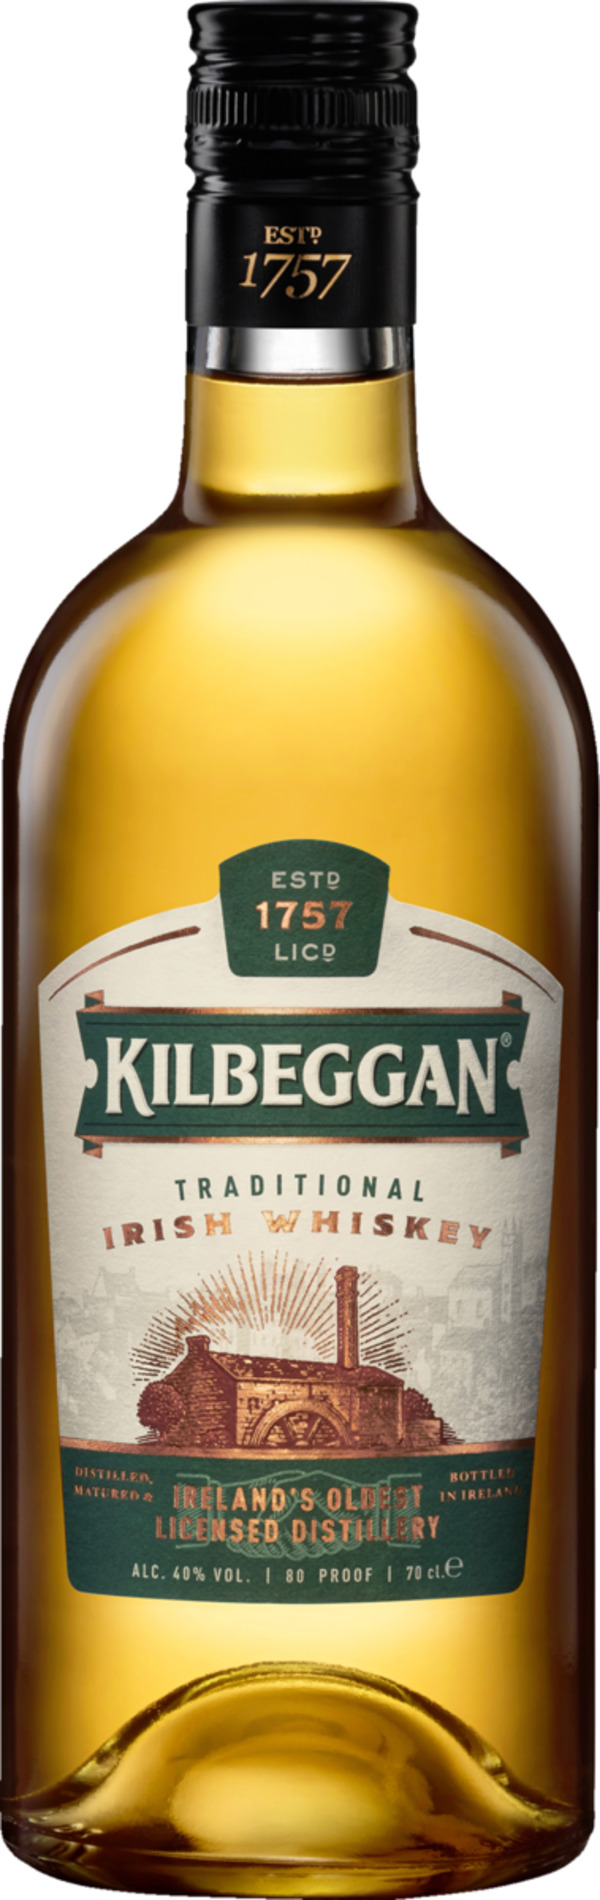 Bild 1 von Kilbeggan Kilbeggan Traditional Irish Whiskey